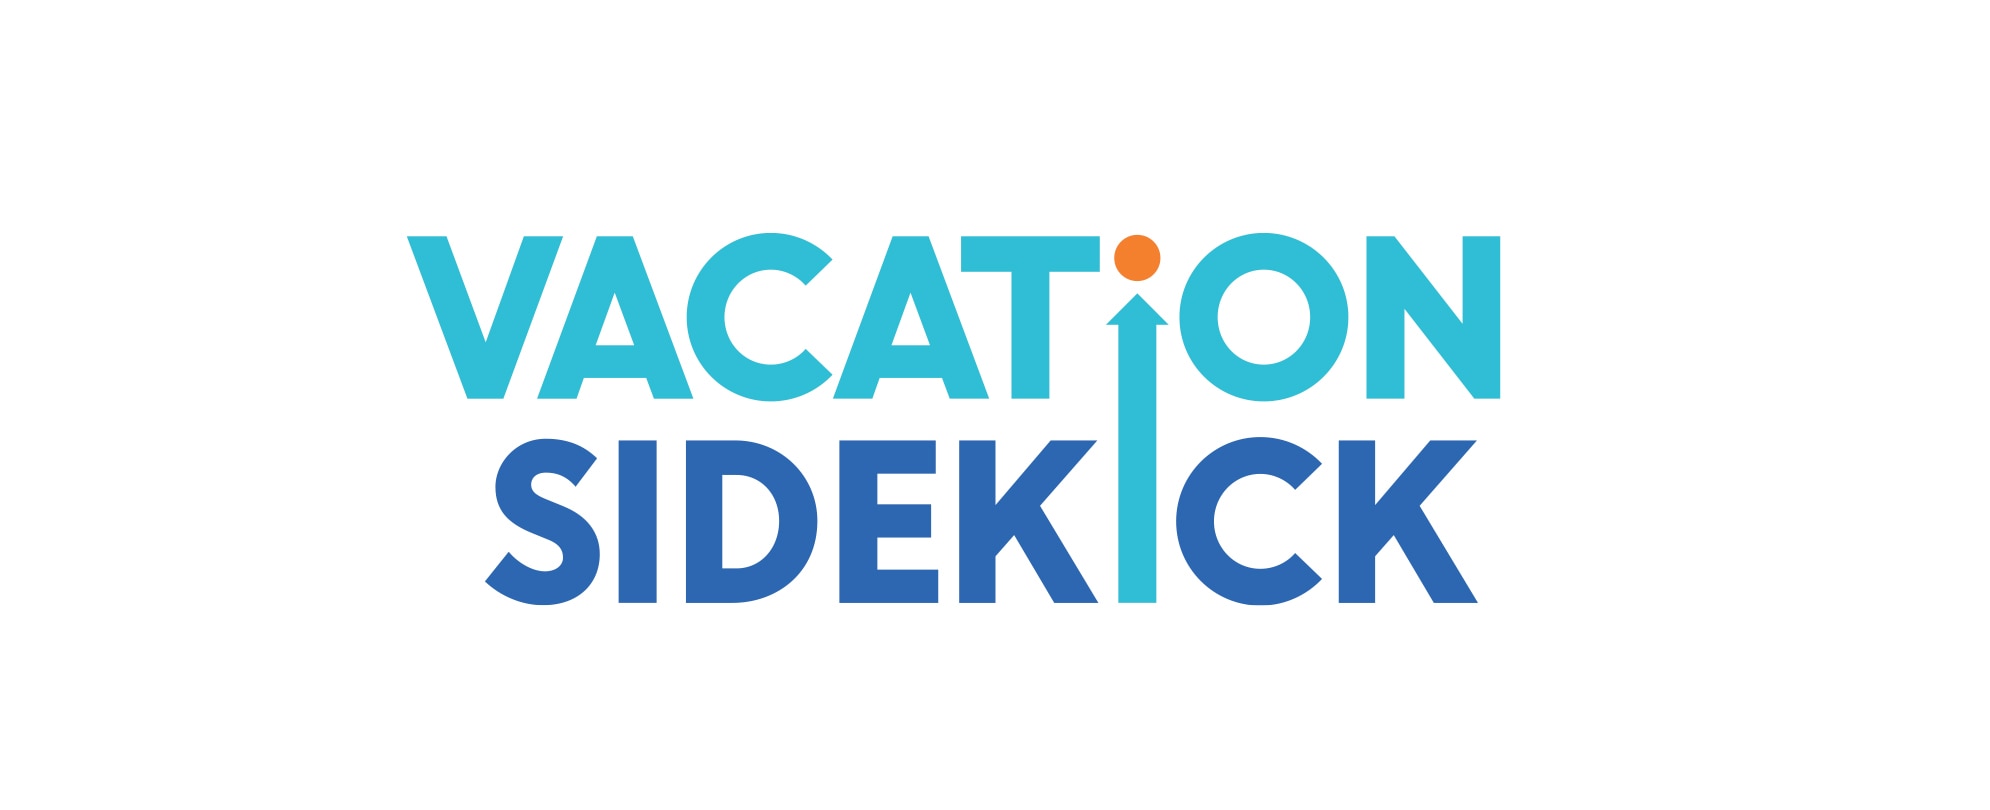 Margaritaville Vacation Club Vacation Sidekick logo. 